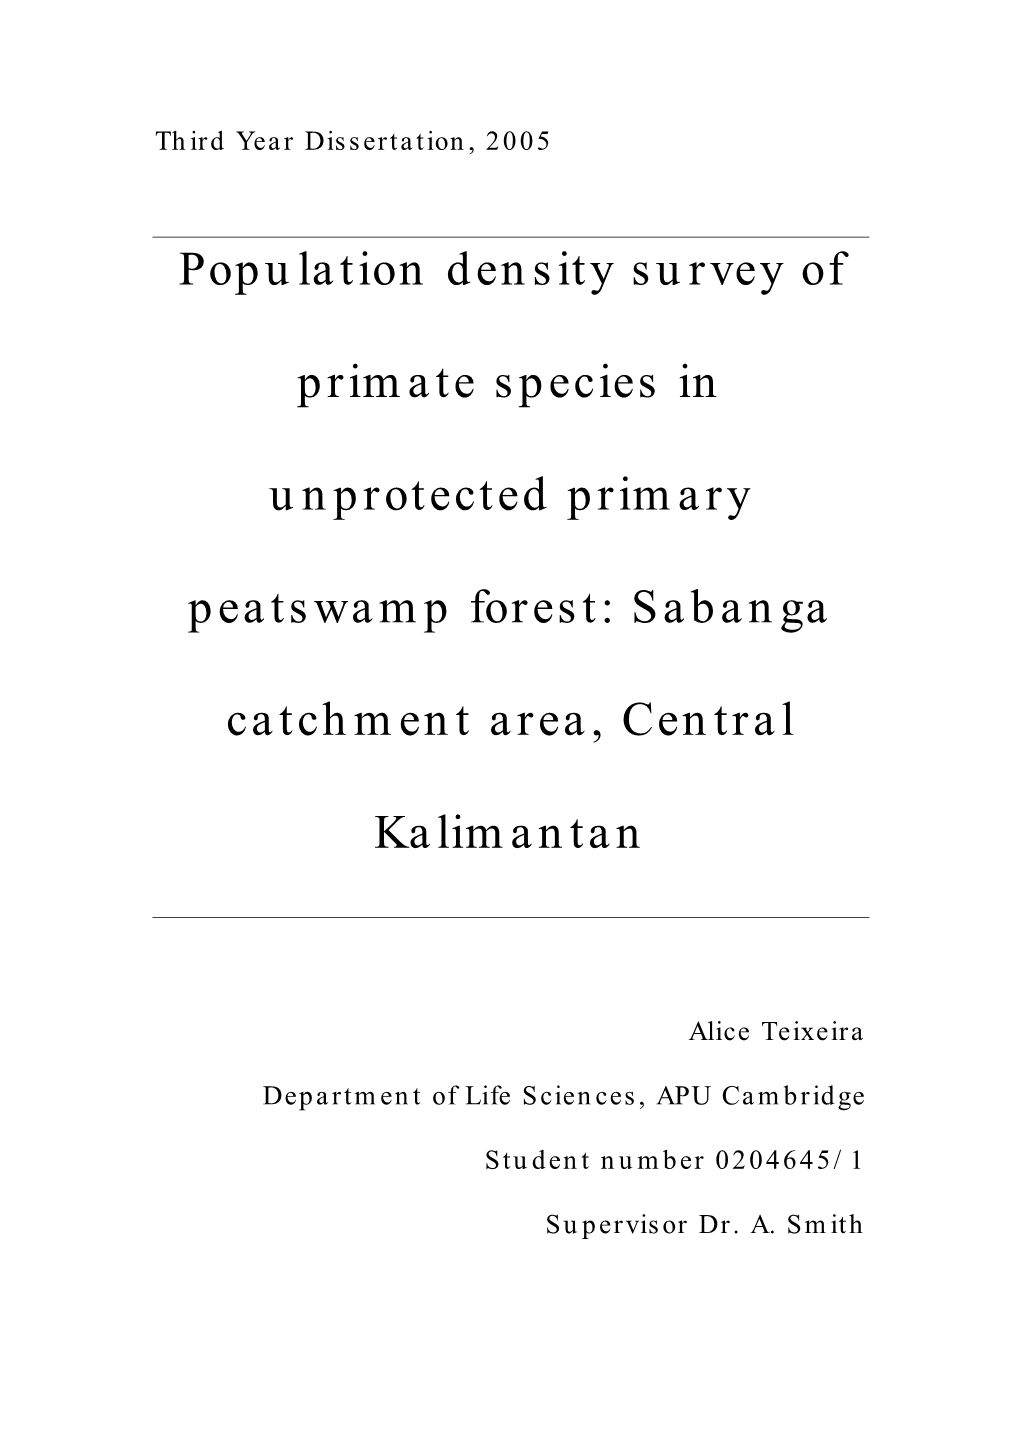 Population Density Survey of Primate